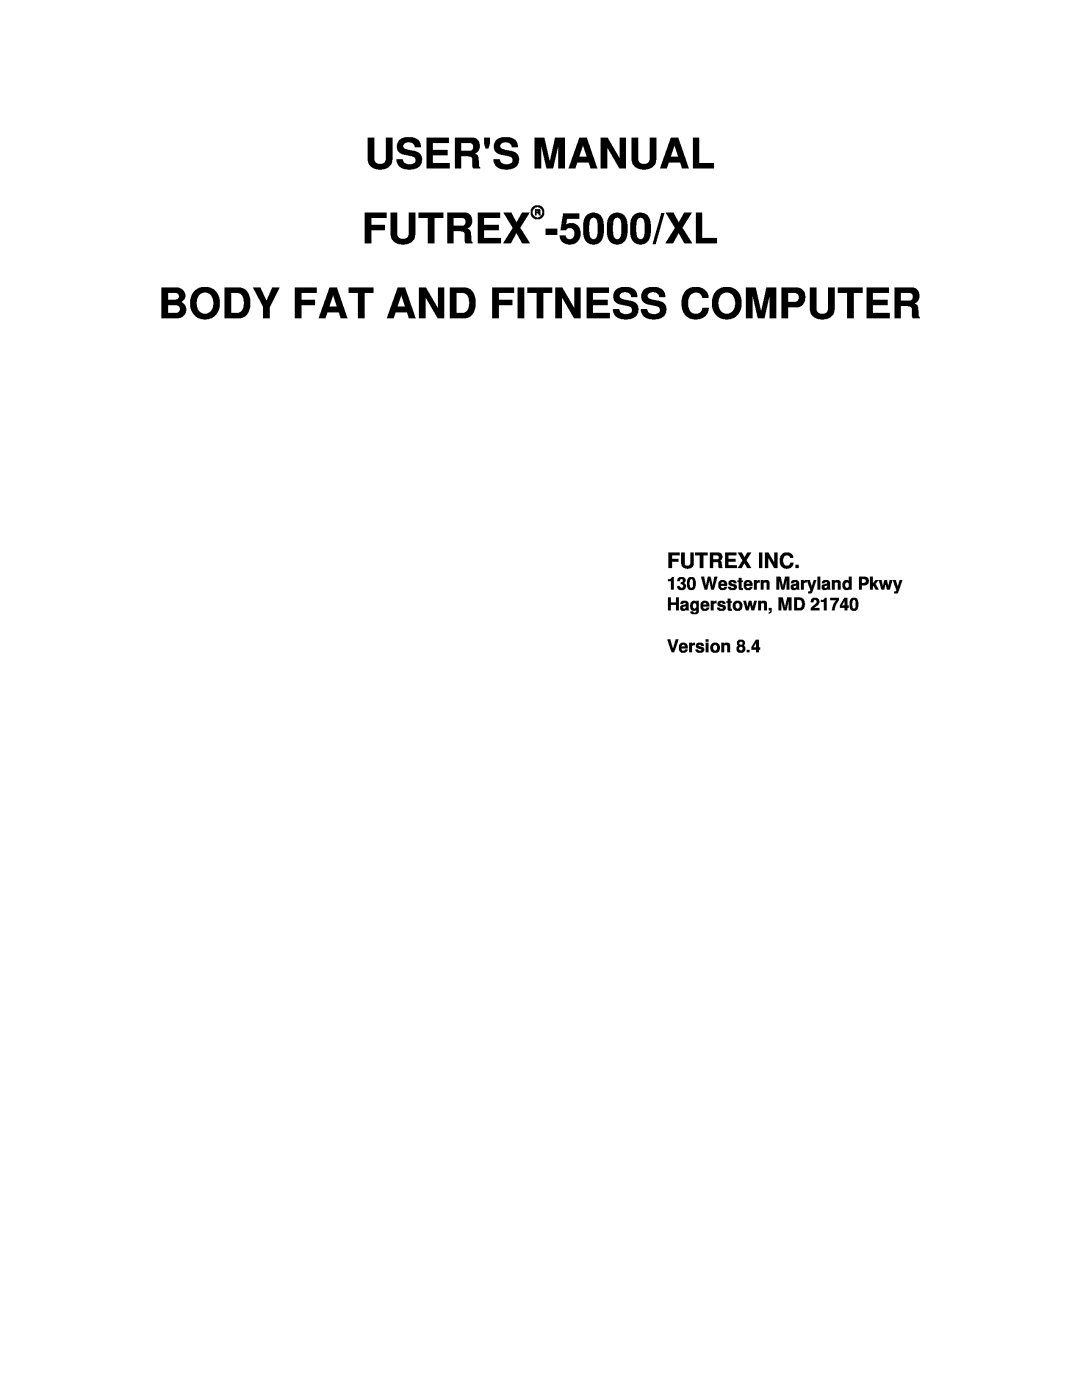 Futrex Futrex -5000/XL manual Western Maryland Pkwy Hagerstown, MD Version, Futrex Inc 